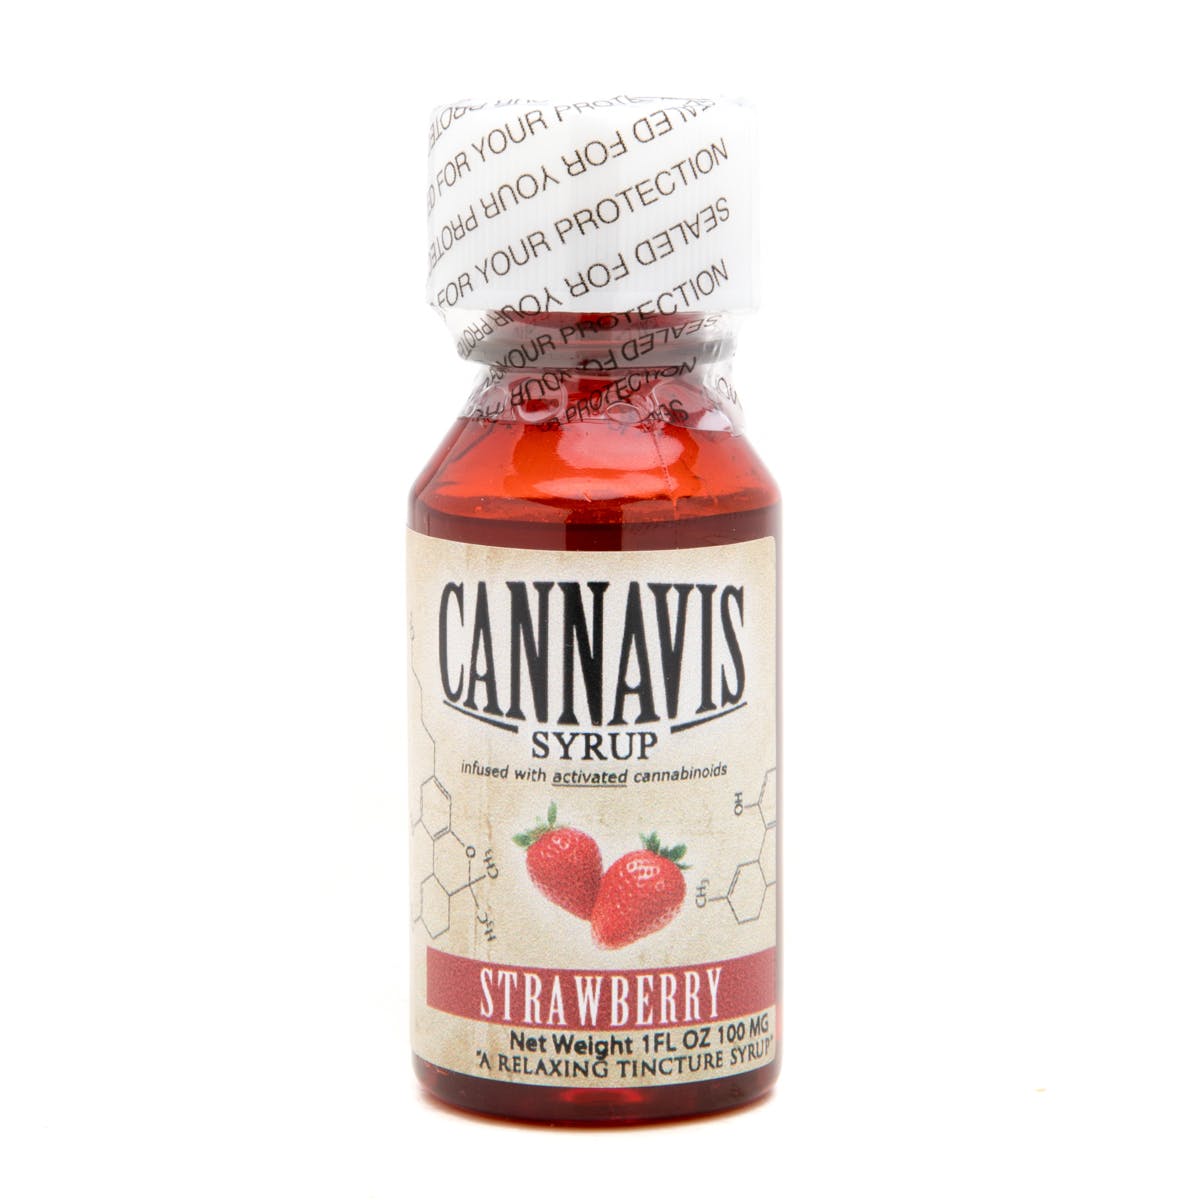 marijuana-dispensaries-gec-in-gardena-cannavis-syrup-2c-strawberry-100mg